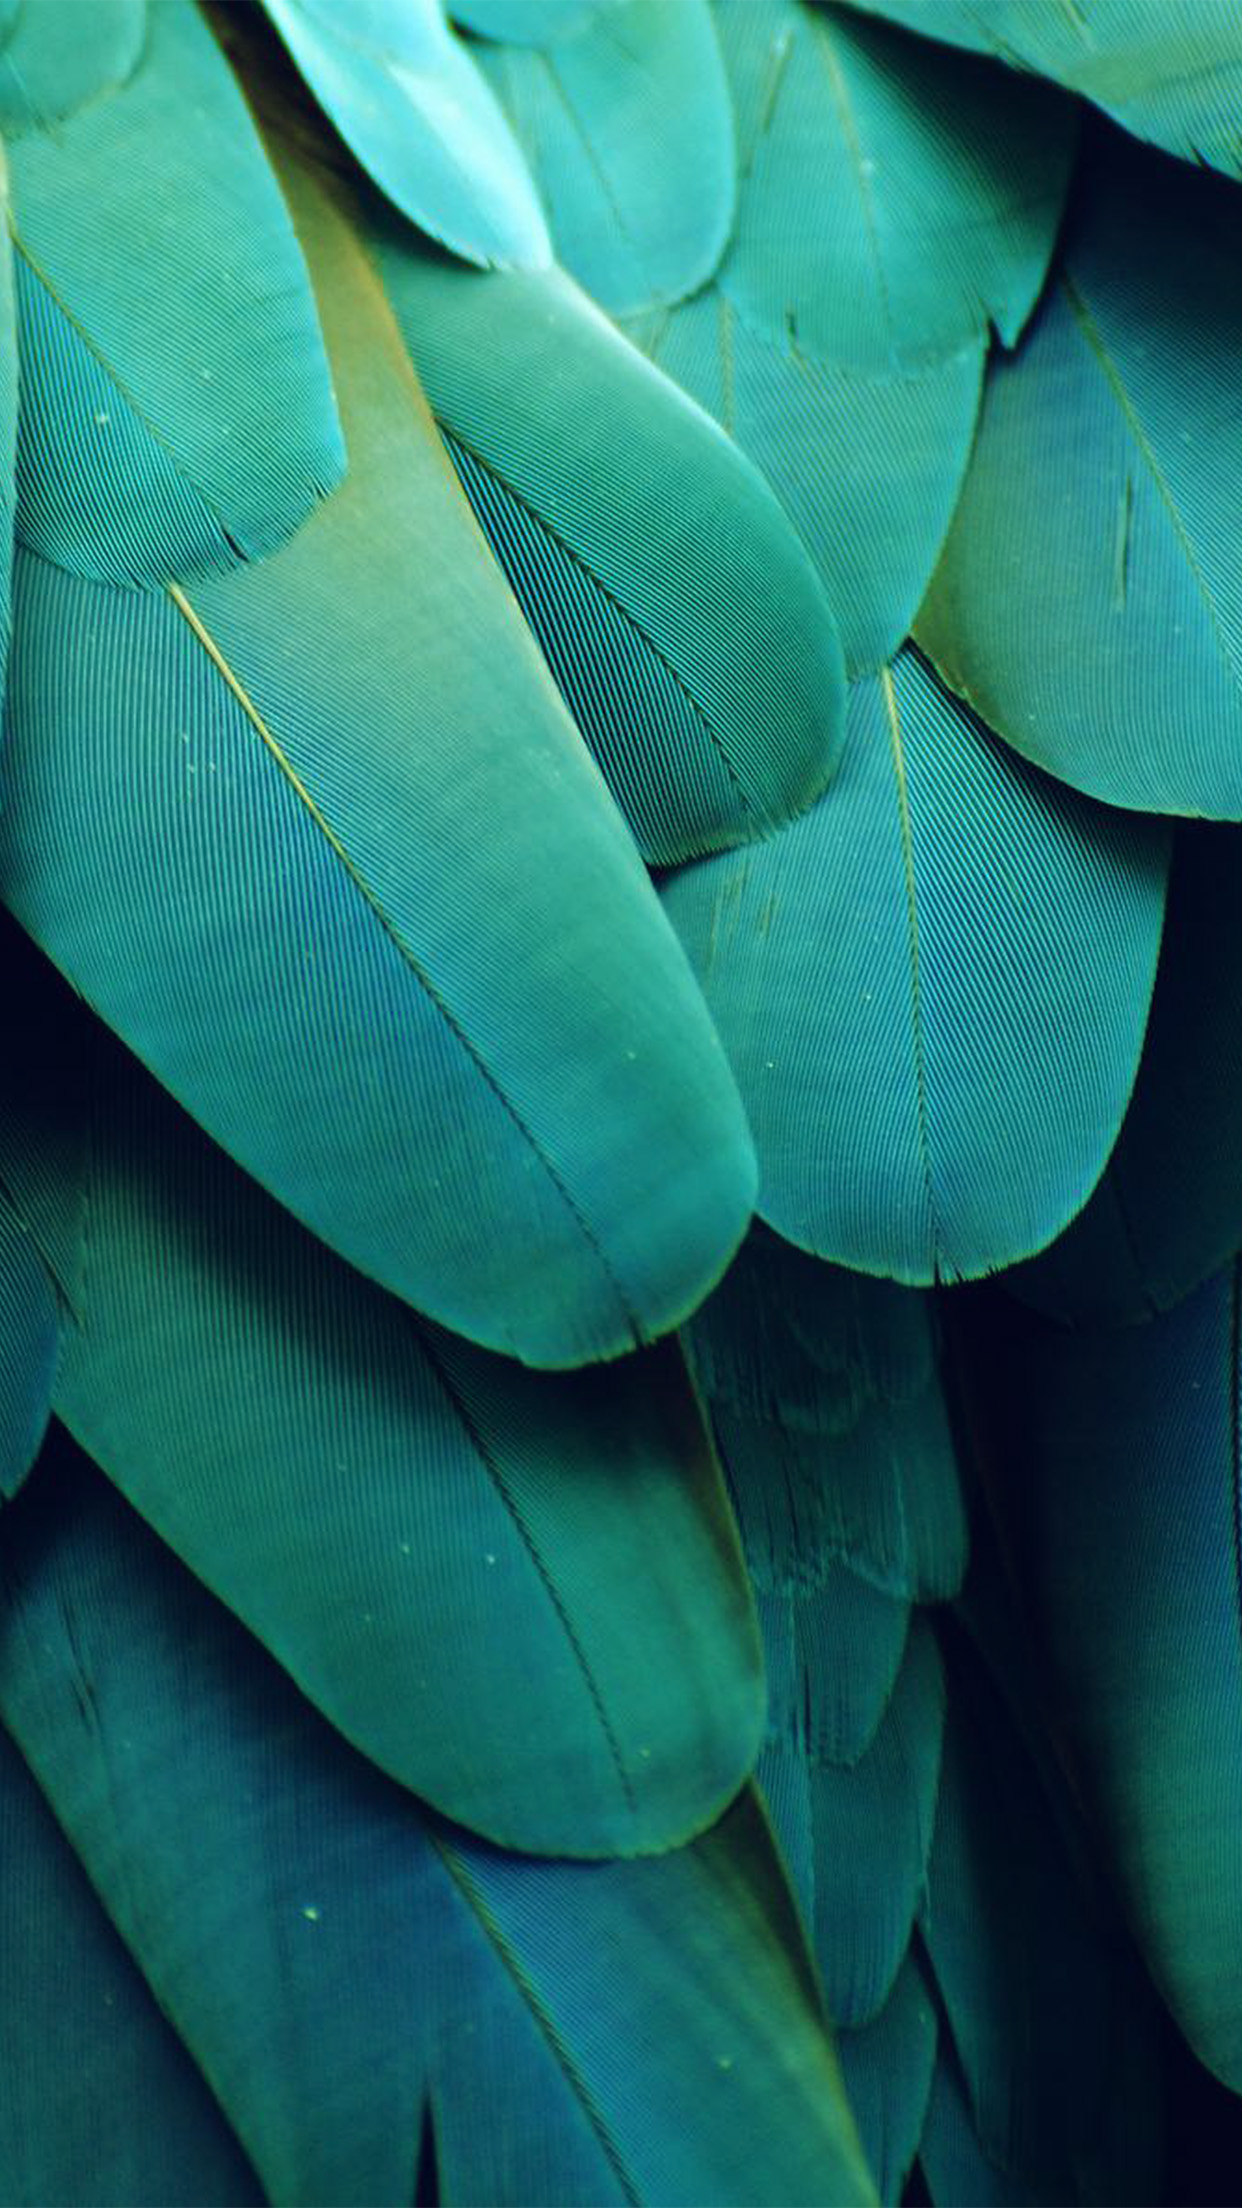 meizu wallpaper,green,blue,turquoise,leaf,teal